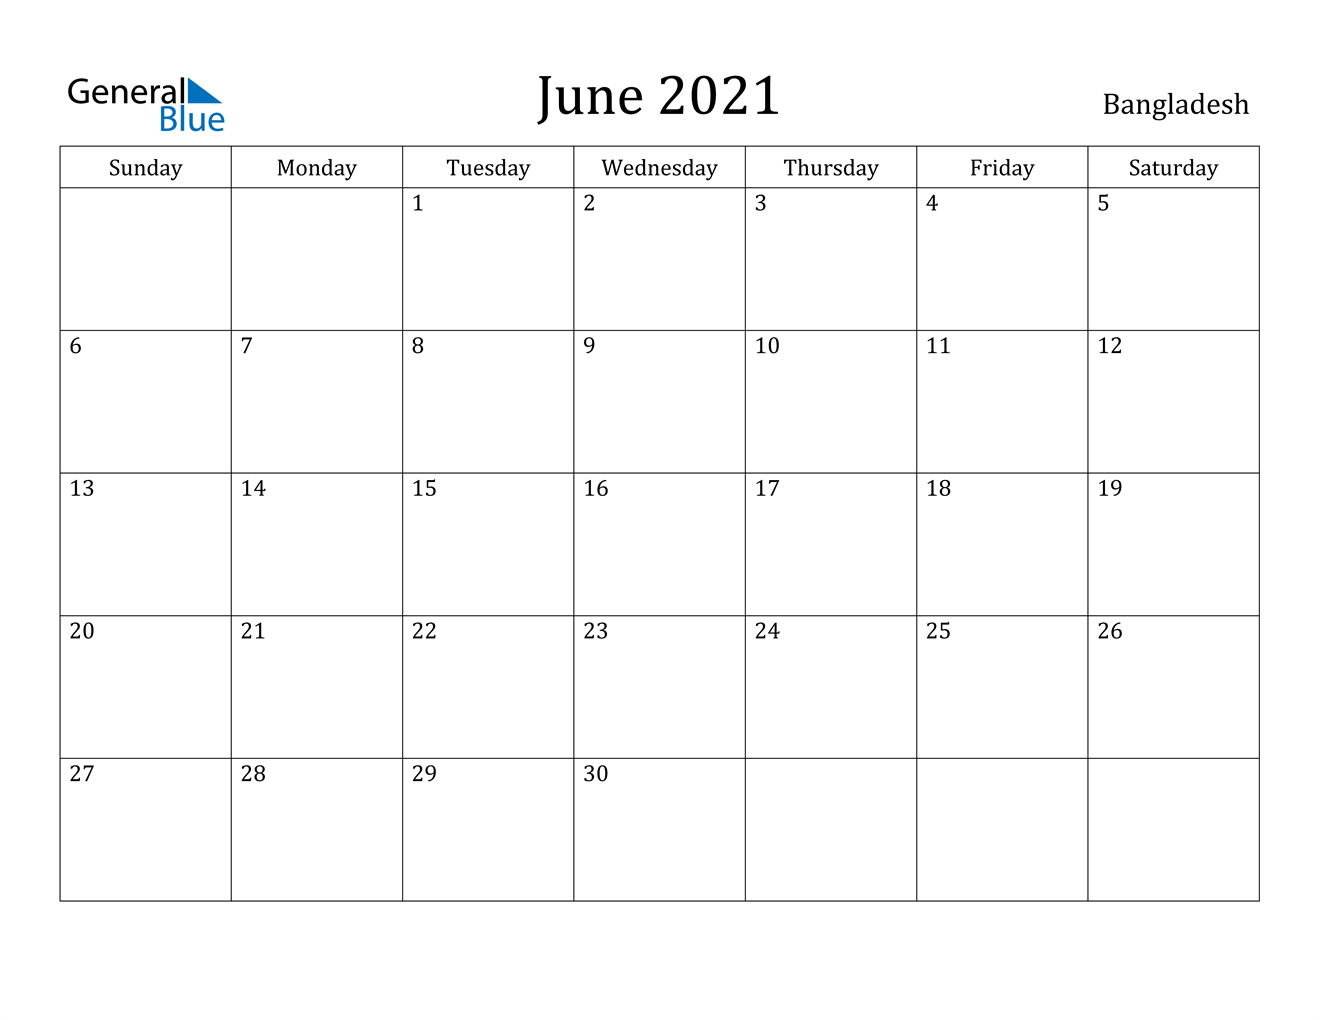 June 2021 Calendar - Bangladesh